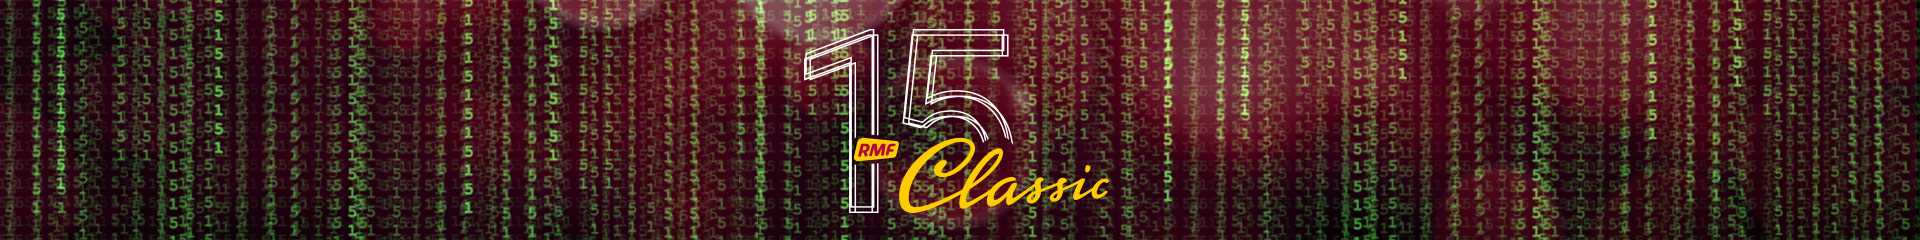 15 lat RMF Classic